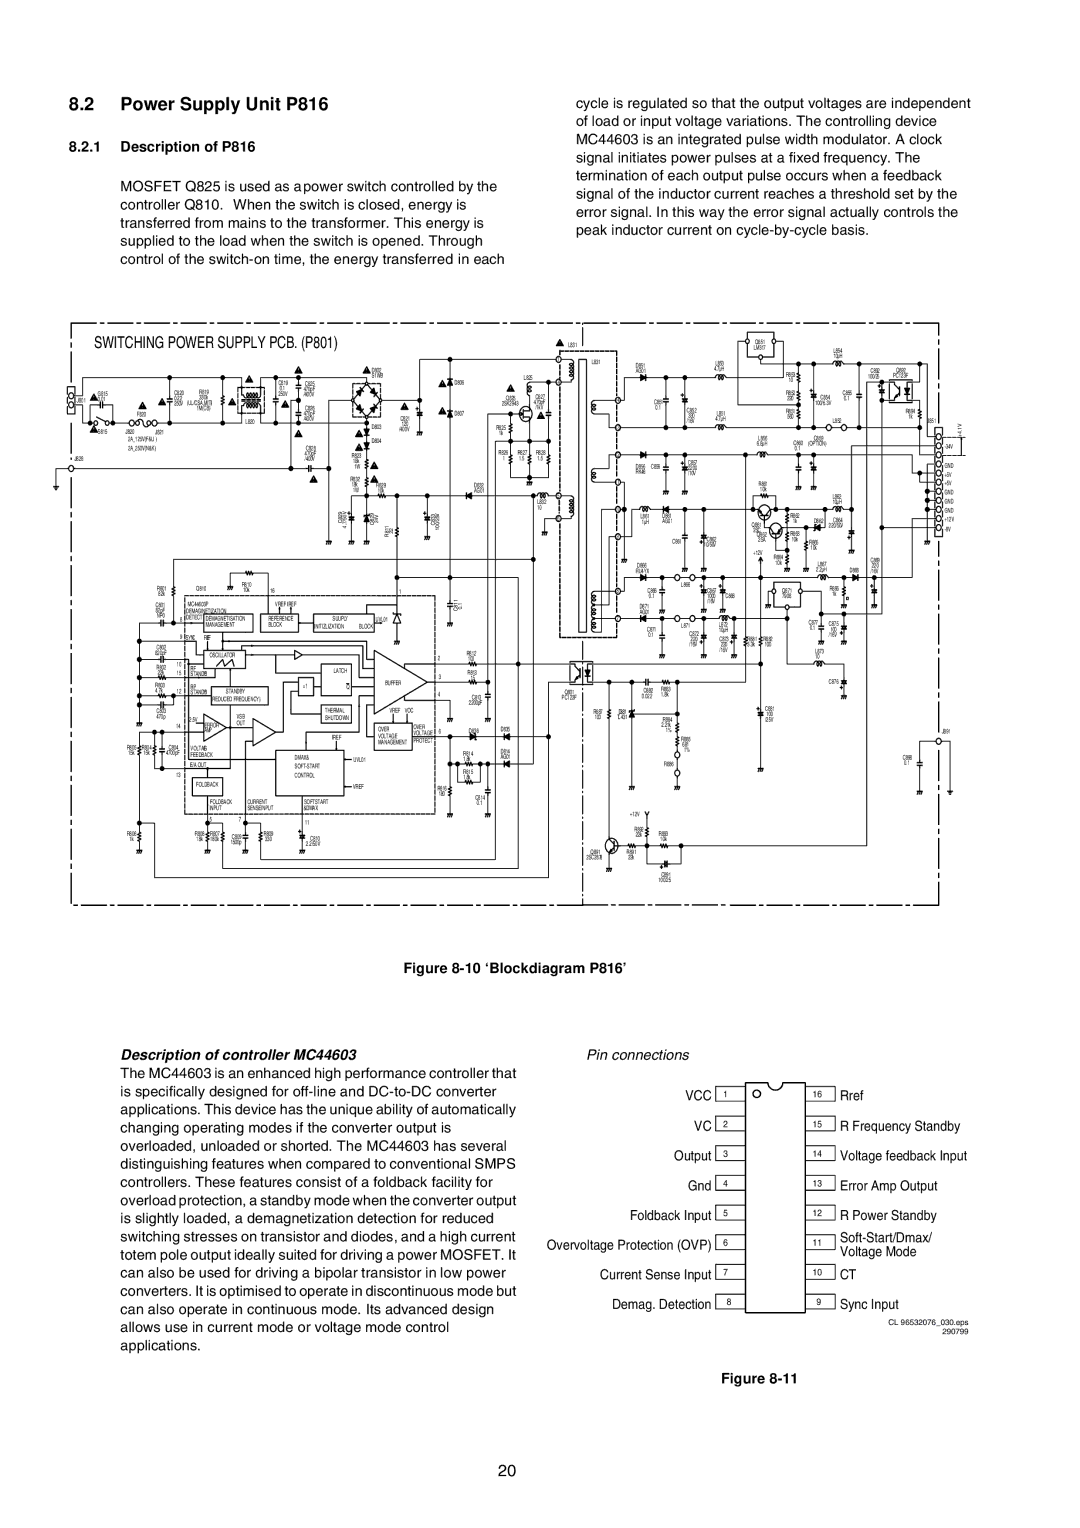 Marantz DR-6000, MAR770 Power Supply Unit P816, Description of P816, Description of controller MC44603, Pin connections 